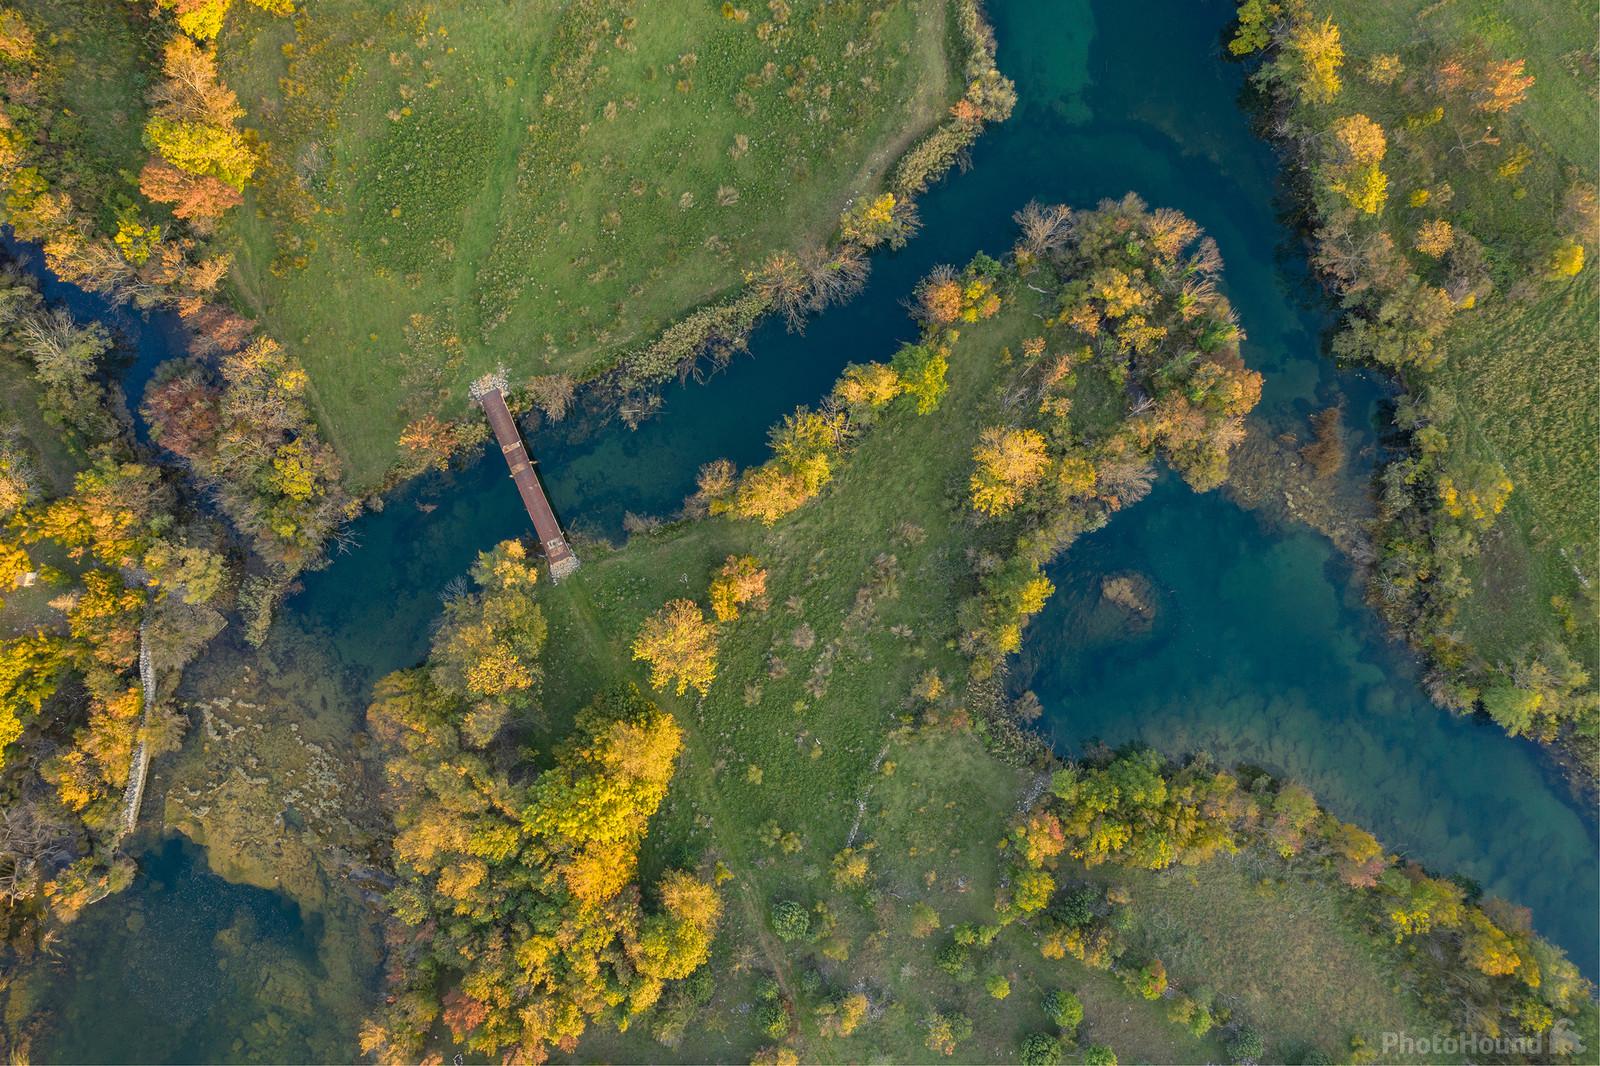 Image of Zrmanja River - Berberov Buk by Luka Esenko